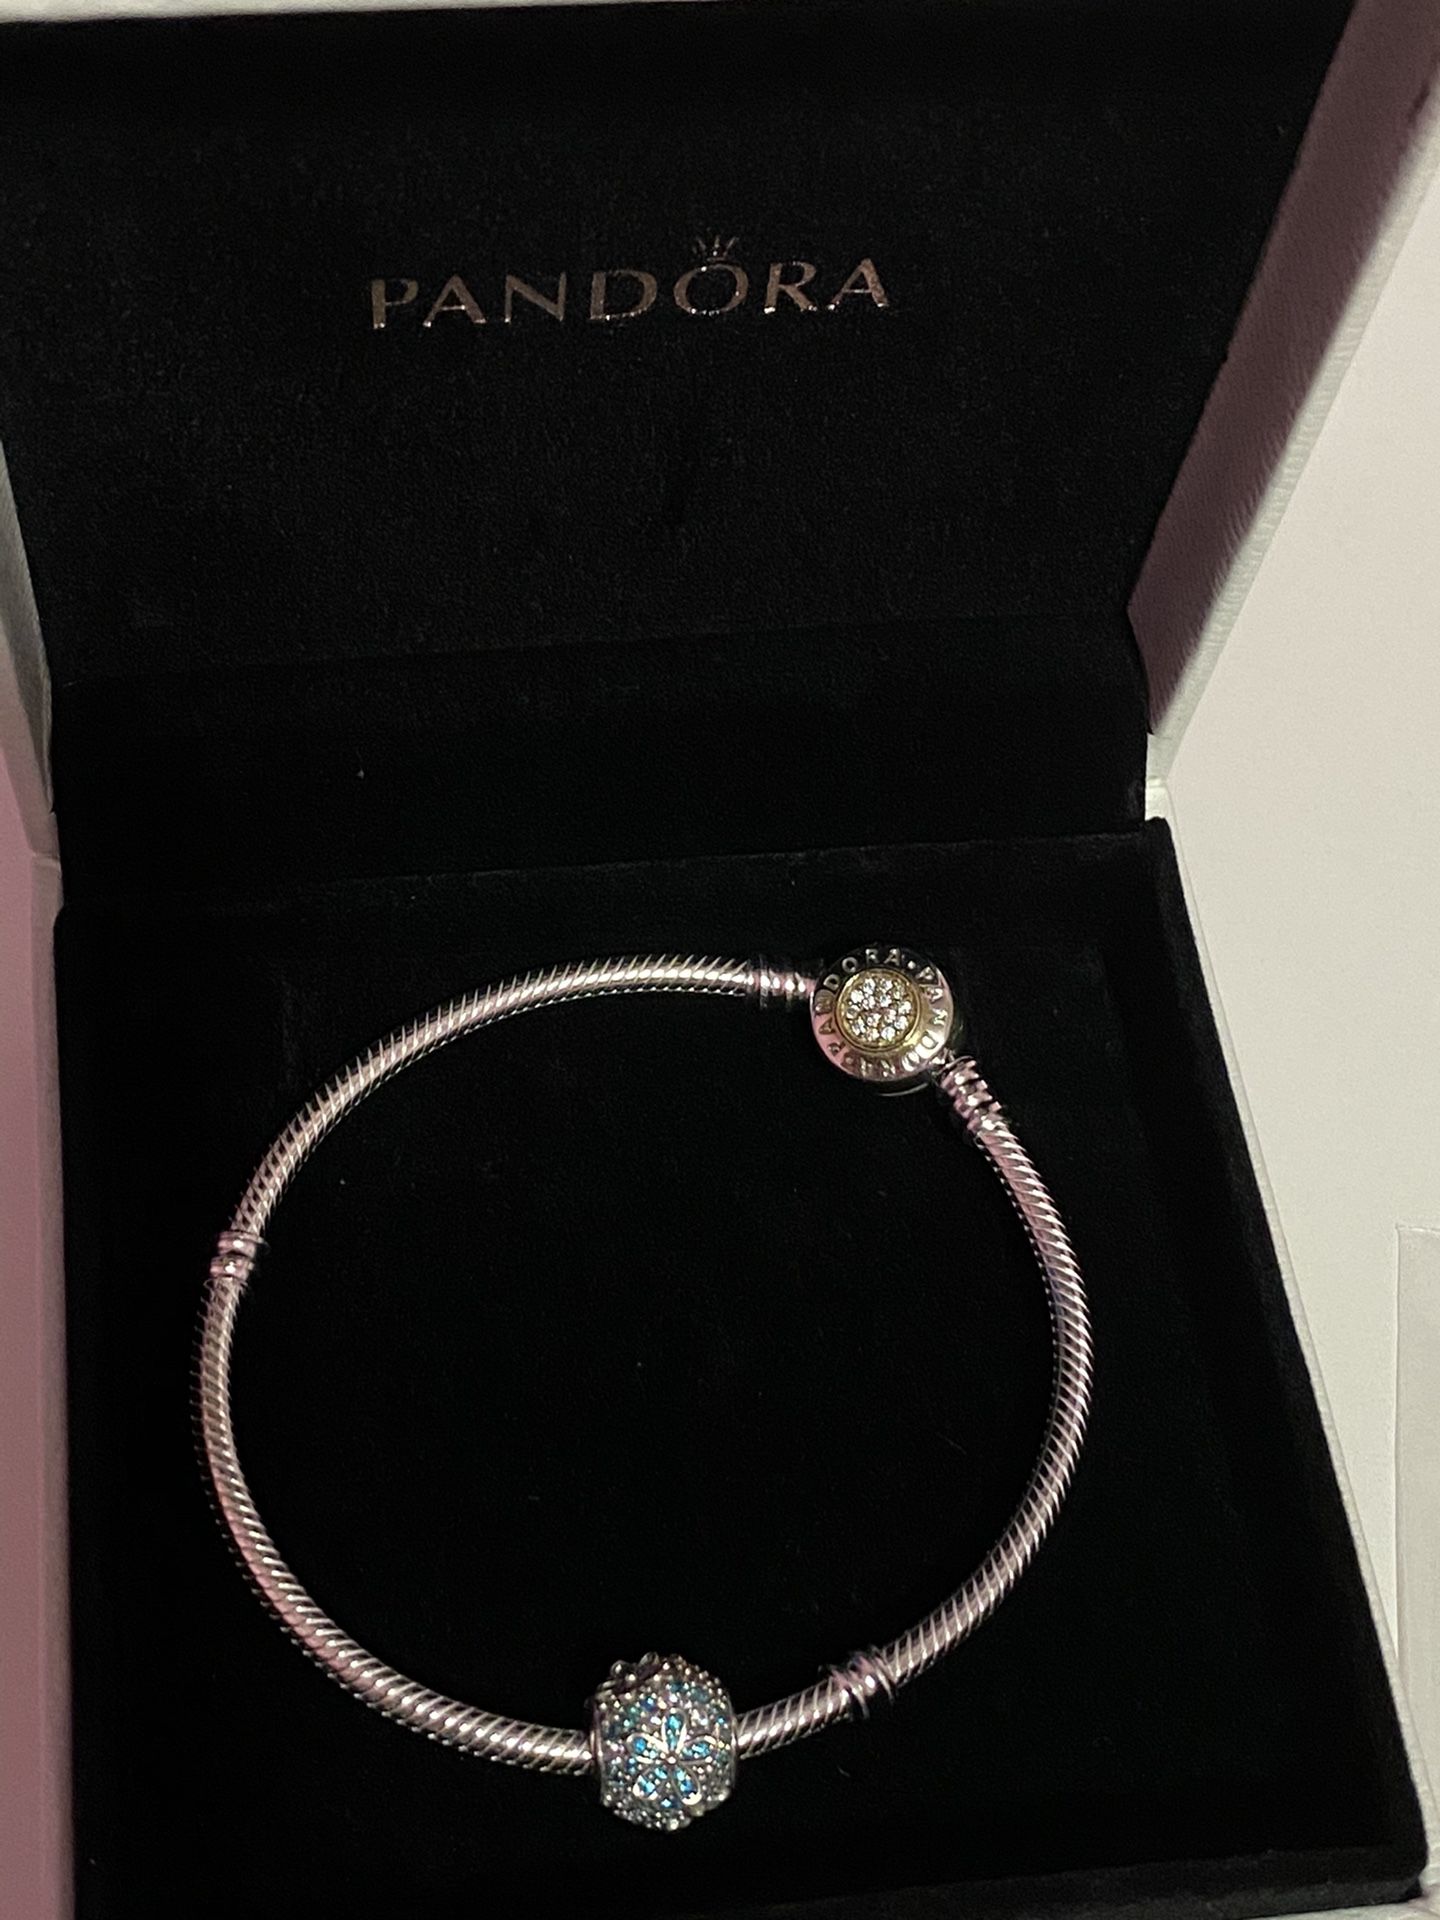 Pandora Bracelet and Charm